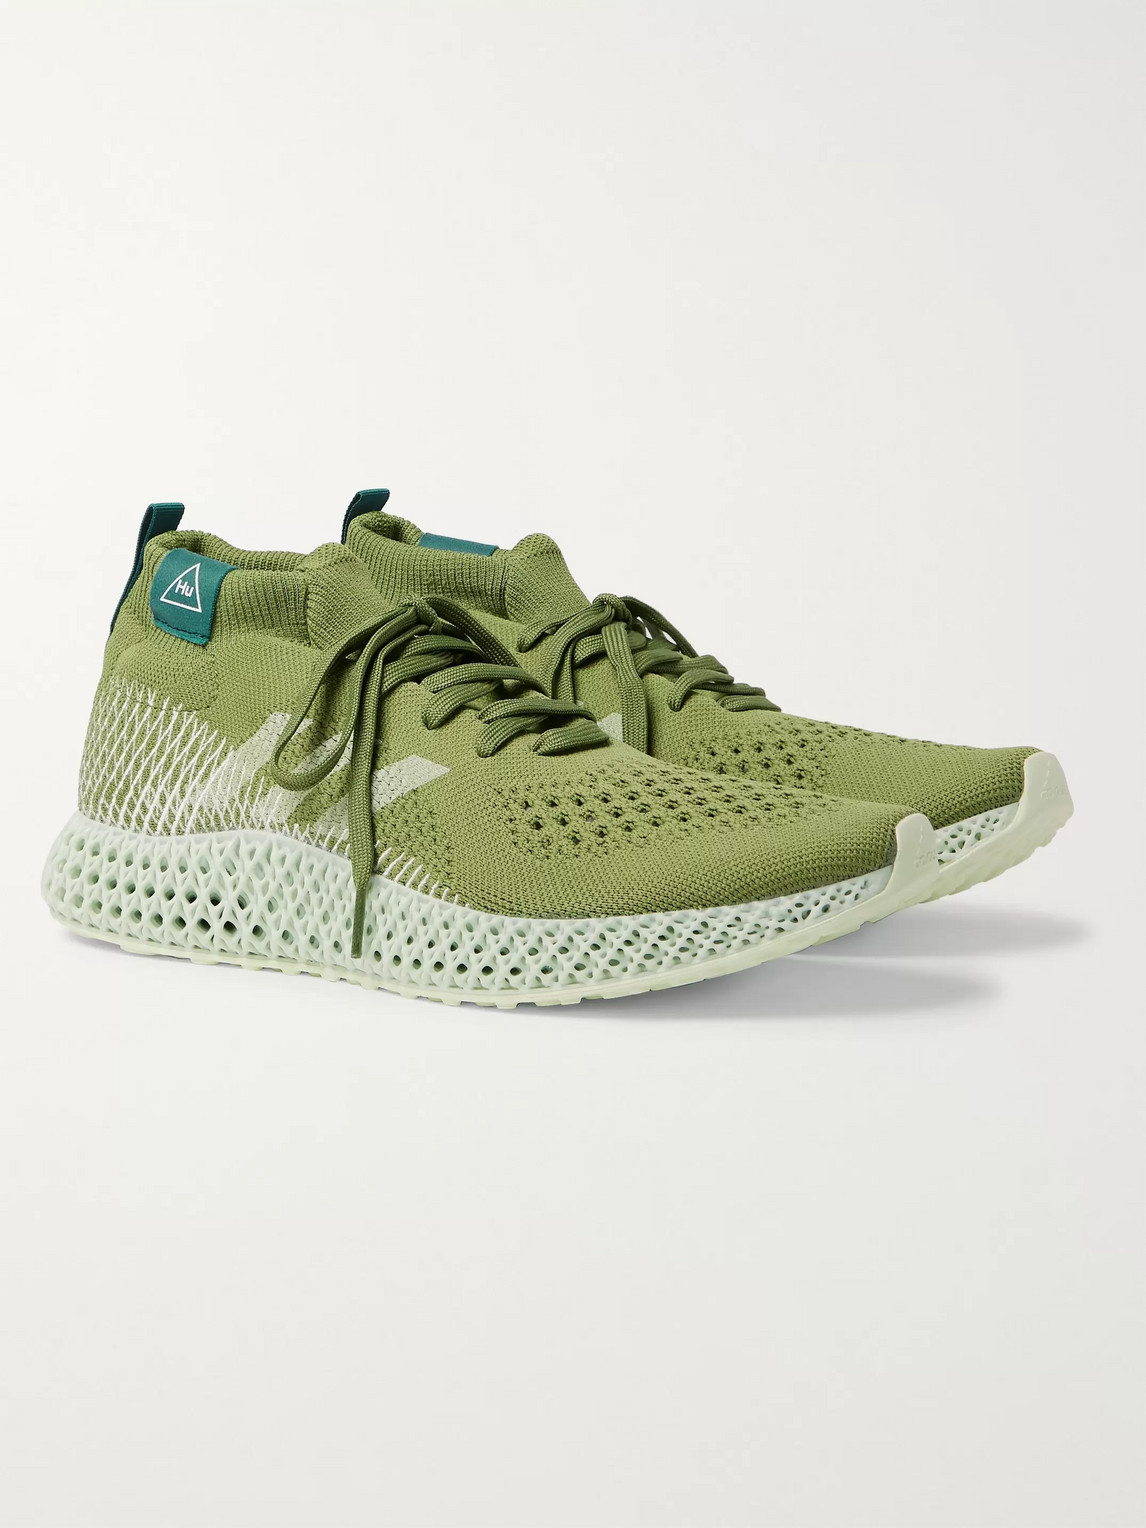 Adidas Consortium Pharrell Williams 4d Runner Embroidered Primeknit Sneakers In Green